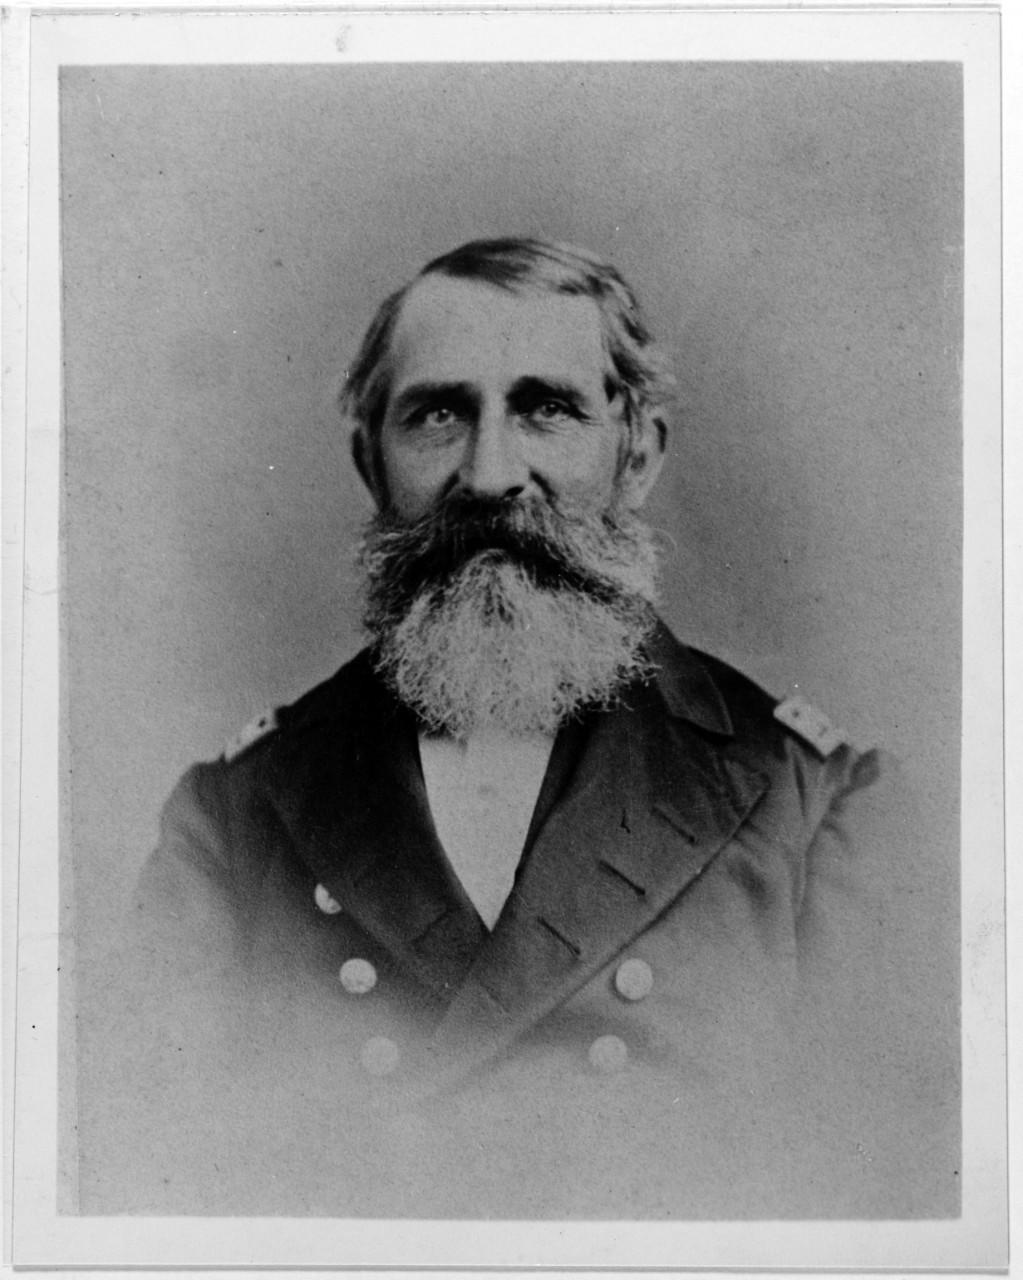 Captain George H. Preble, USN